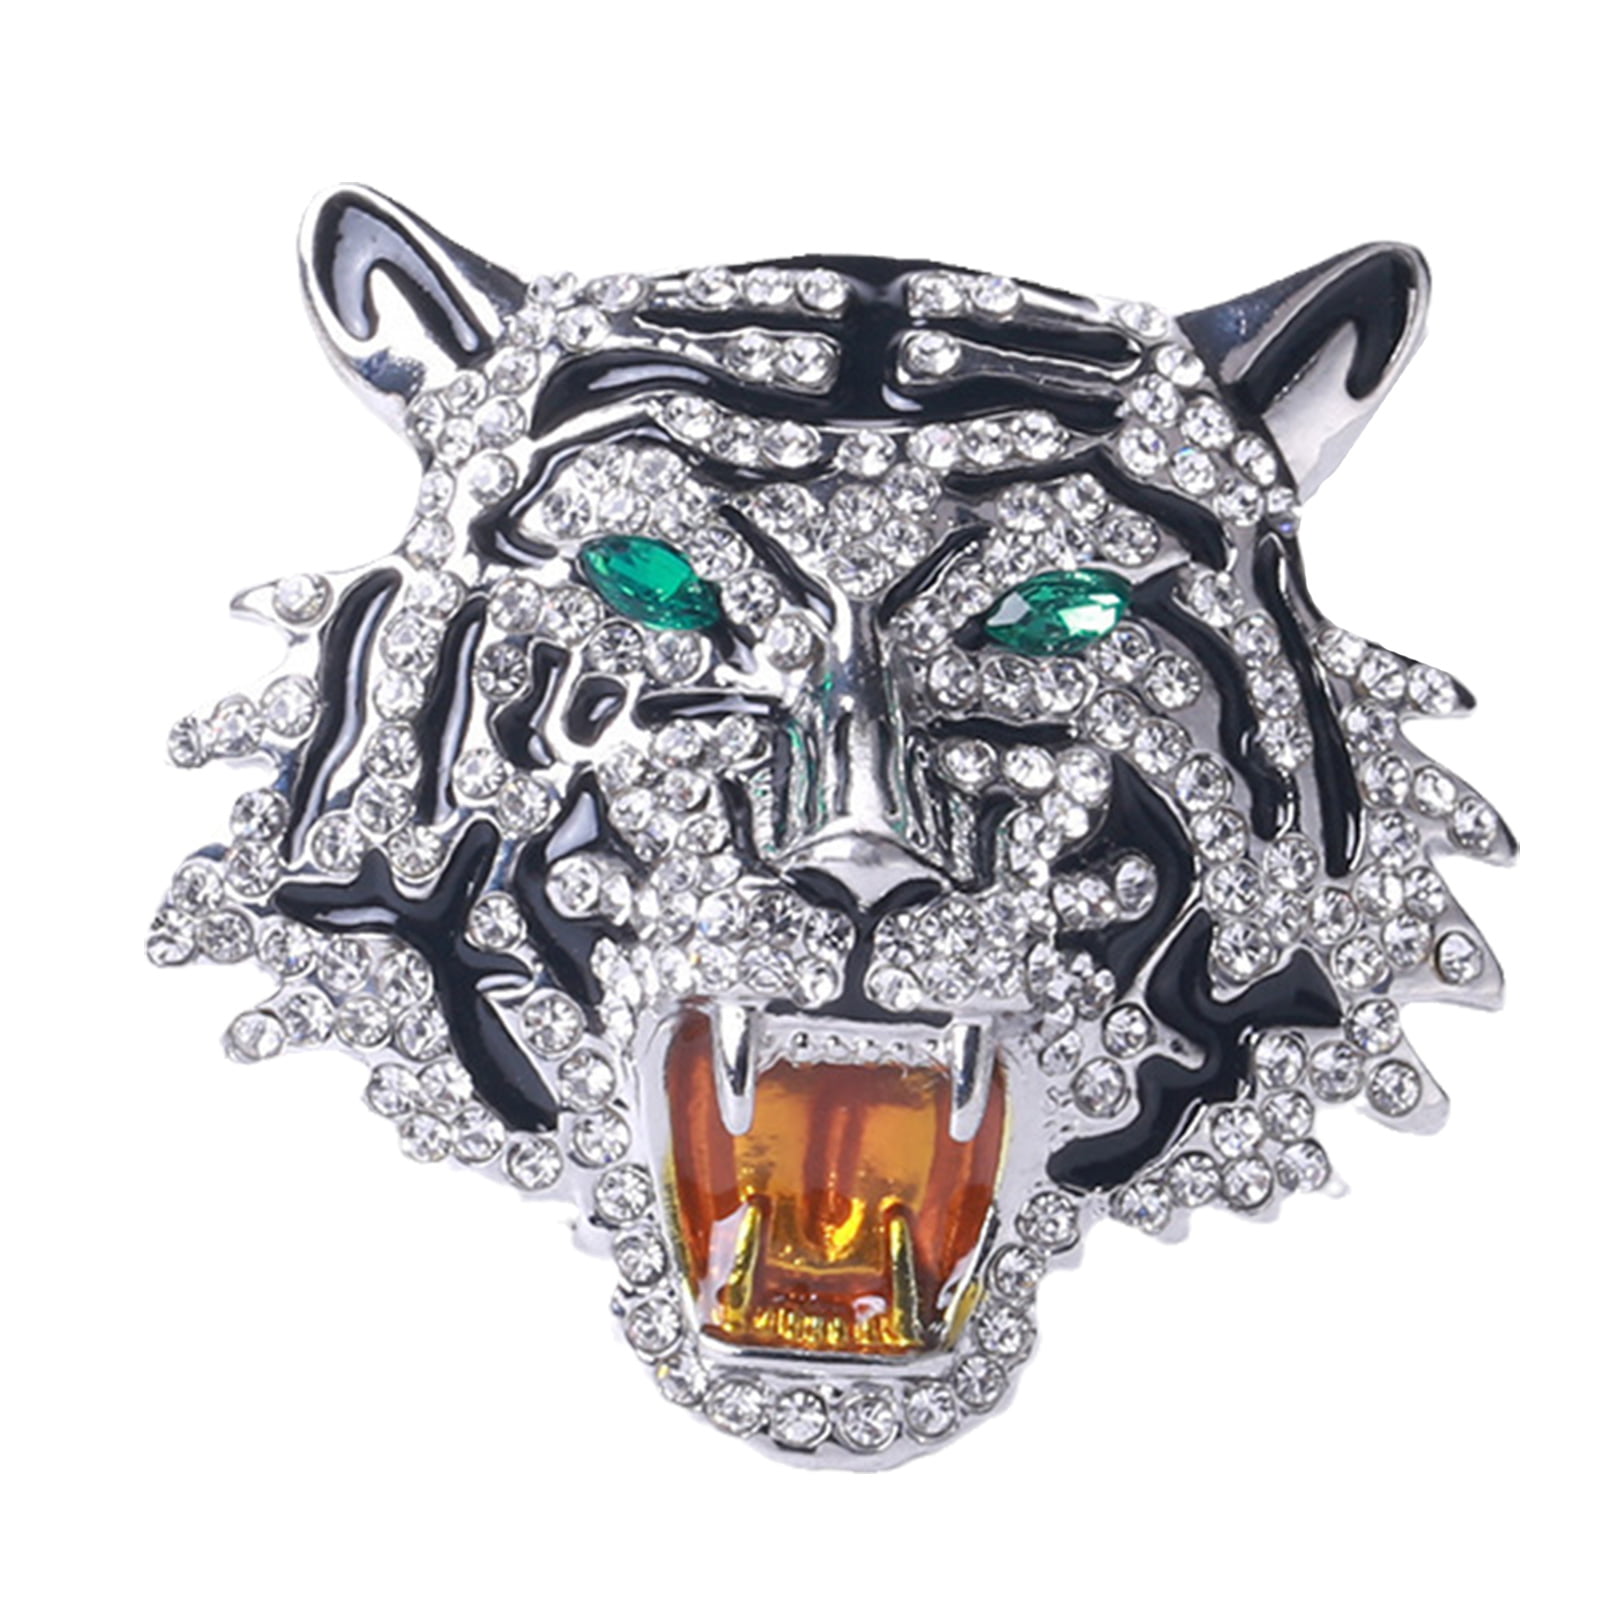 Tiger Head Shape Animal Gift Lapel Pin Brooch Badge Fashion Jewelry 